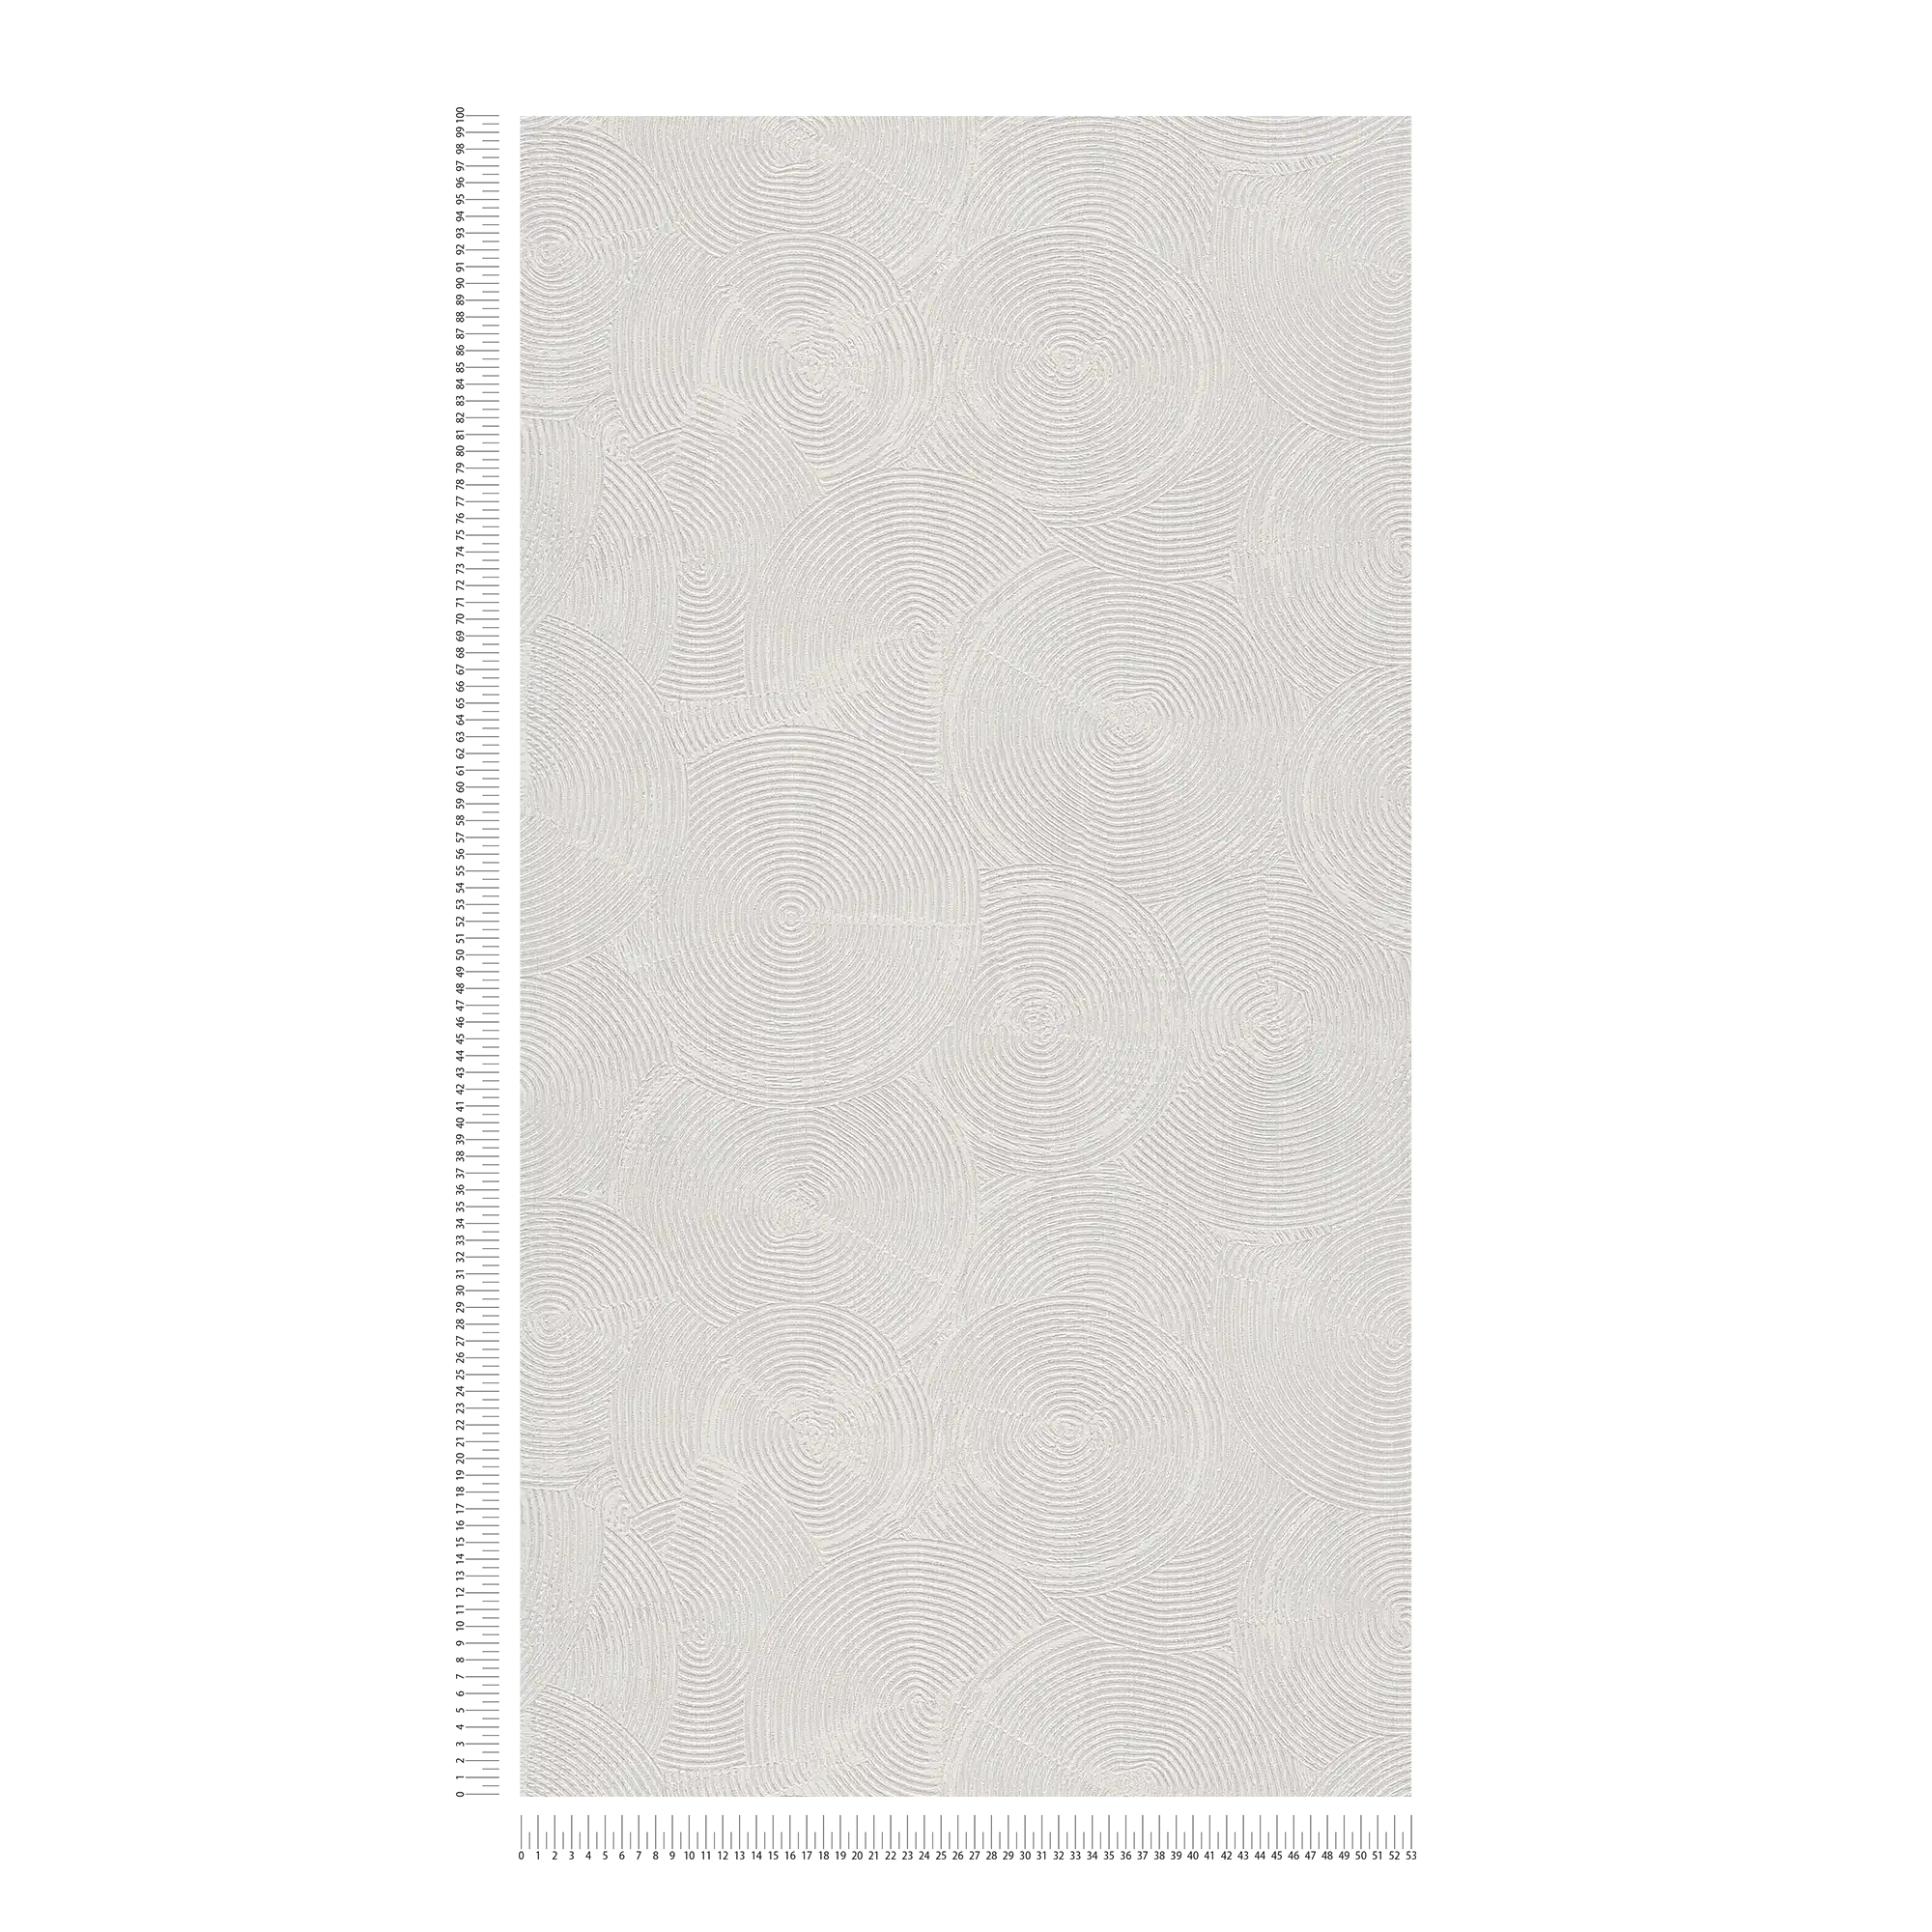             Tapete mit moderner Putzoptik & Metallic-Akzenten – Grau, Metallic, Weiß
        